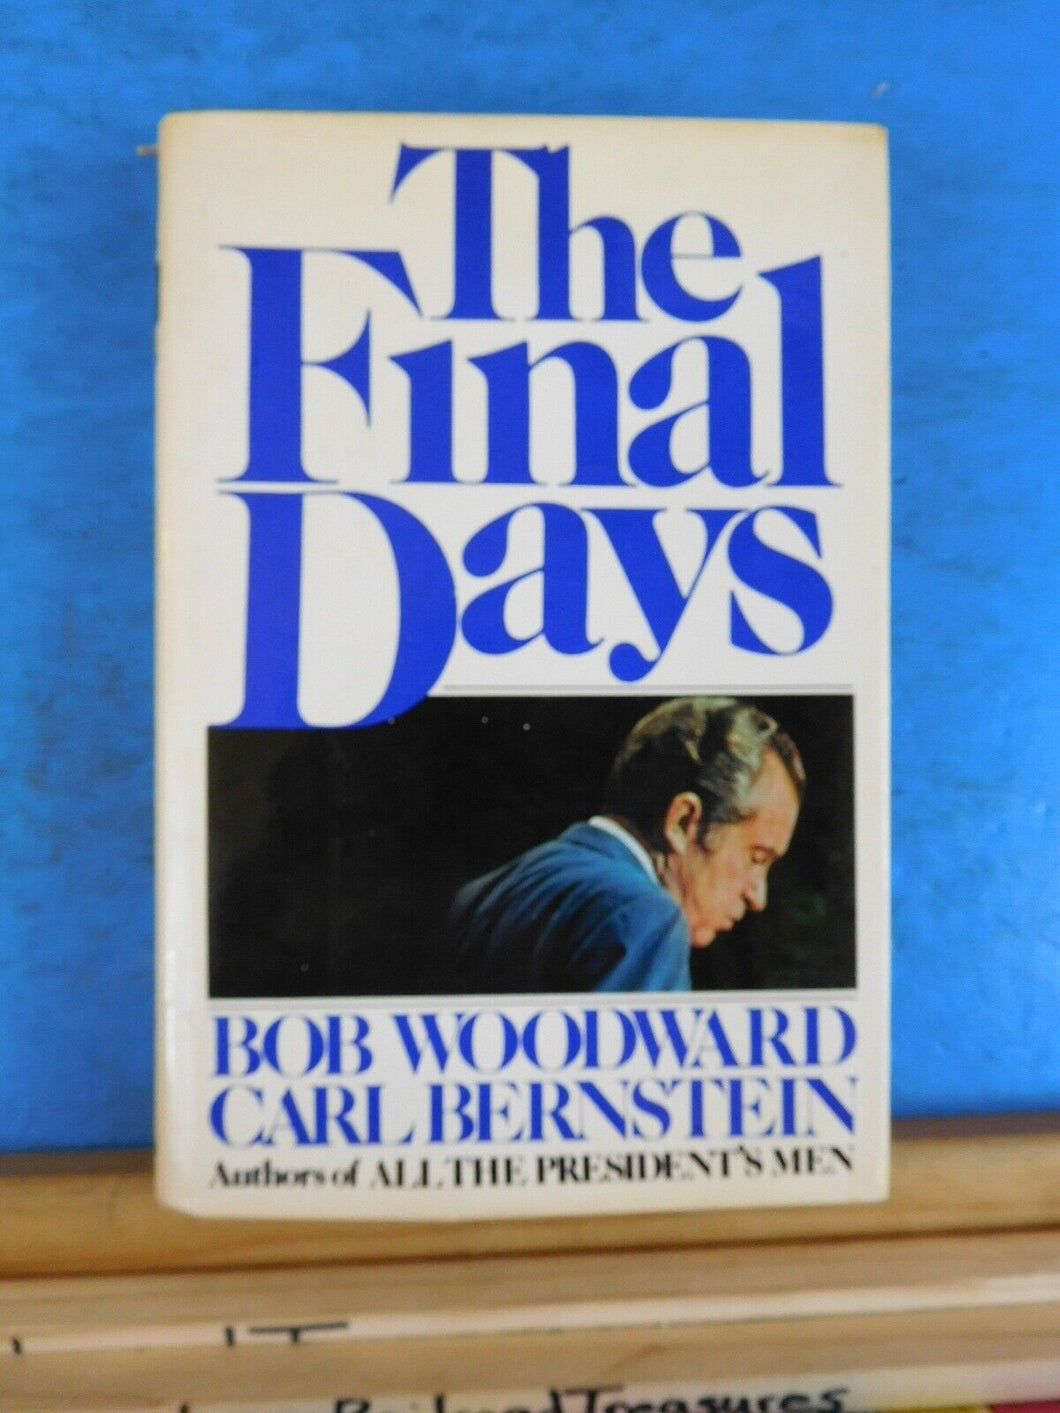 Final Days, The by Bob Woodward & Carl Bernstein w dust jacket